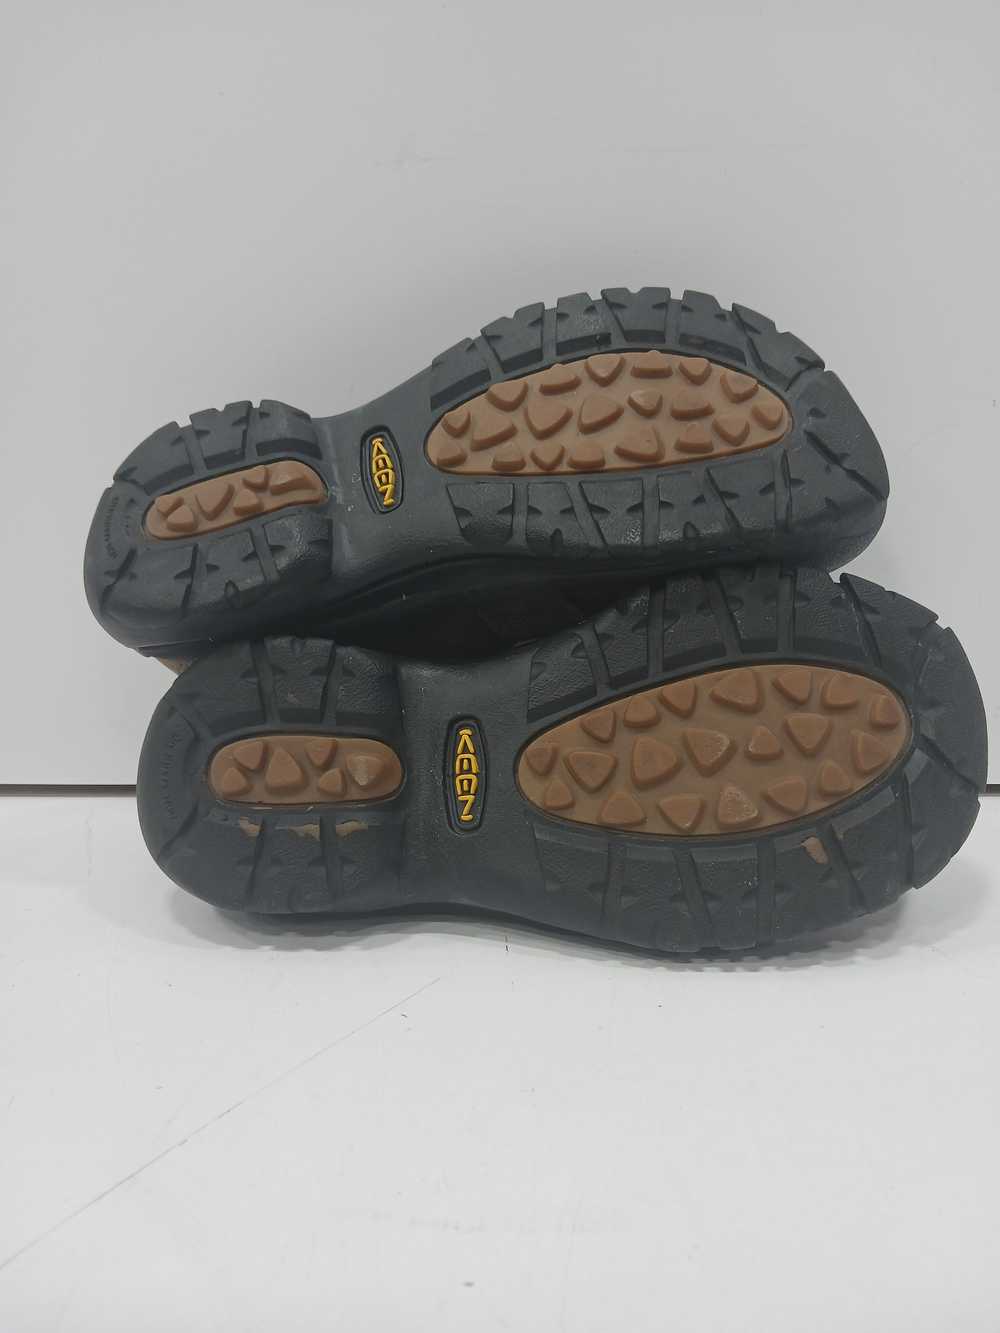 Keen 'Kaci' Brown Slip On Shoes Women's Size 7 - image 5